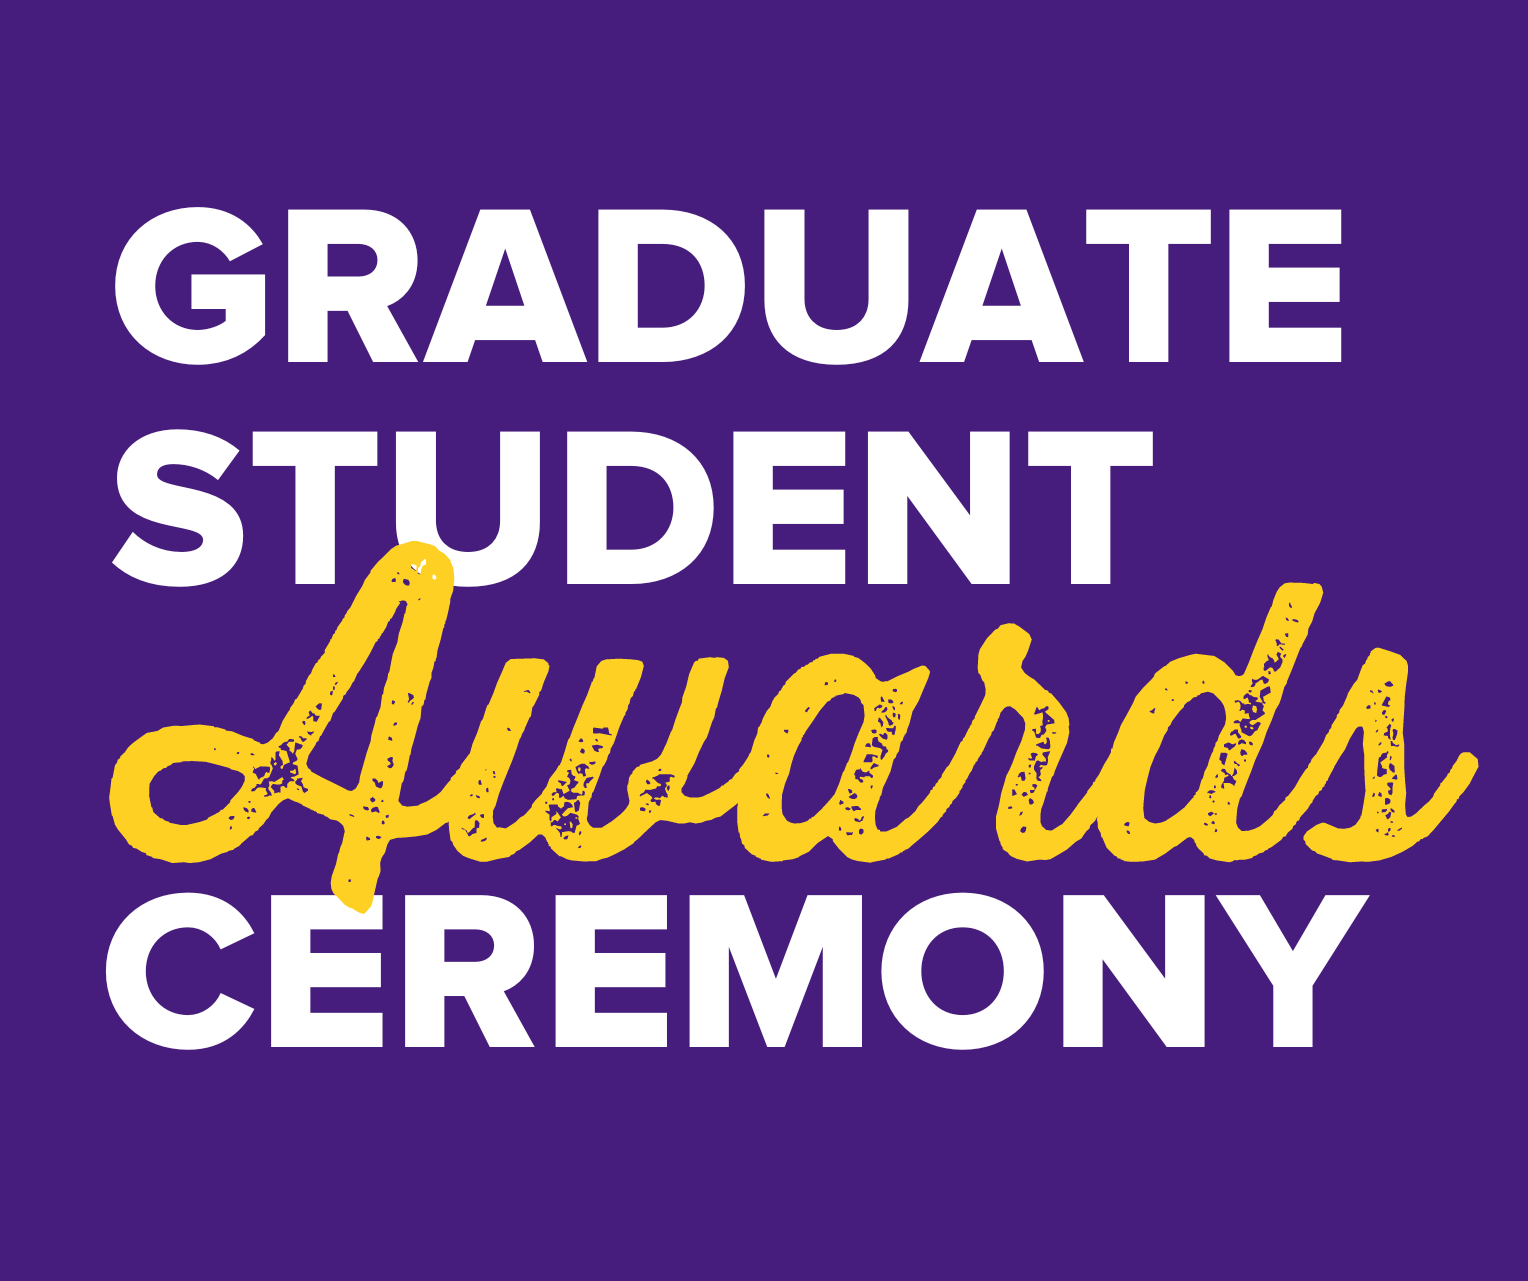 text: Graduate Student Awards Ceremony